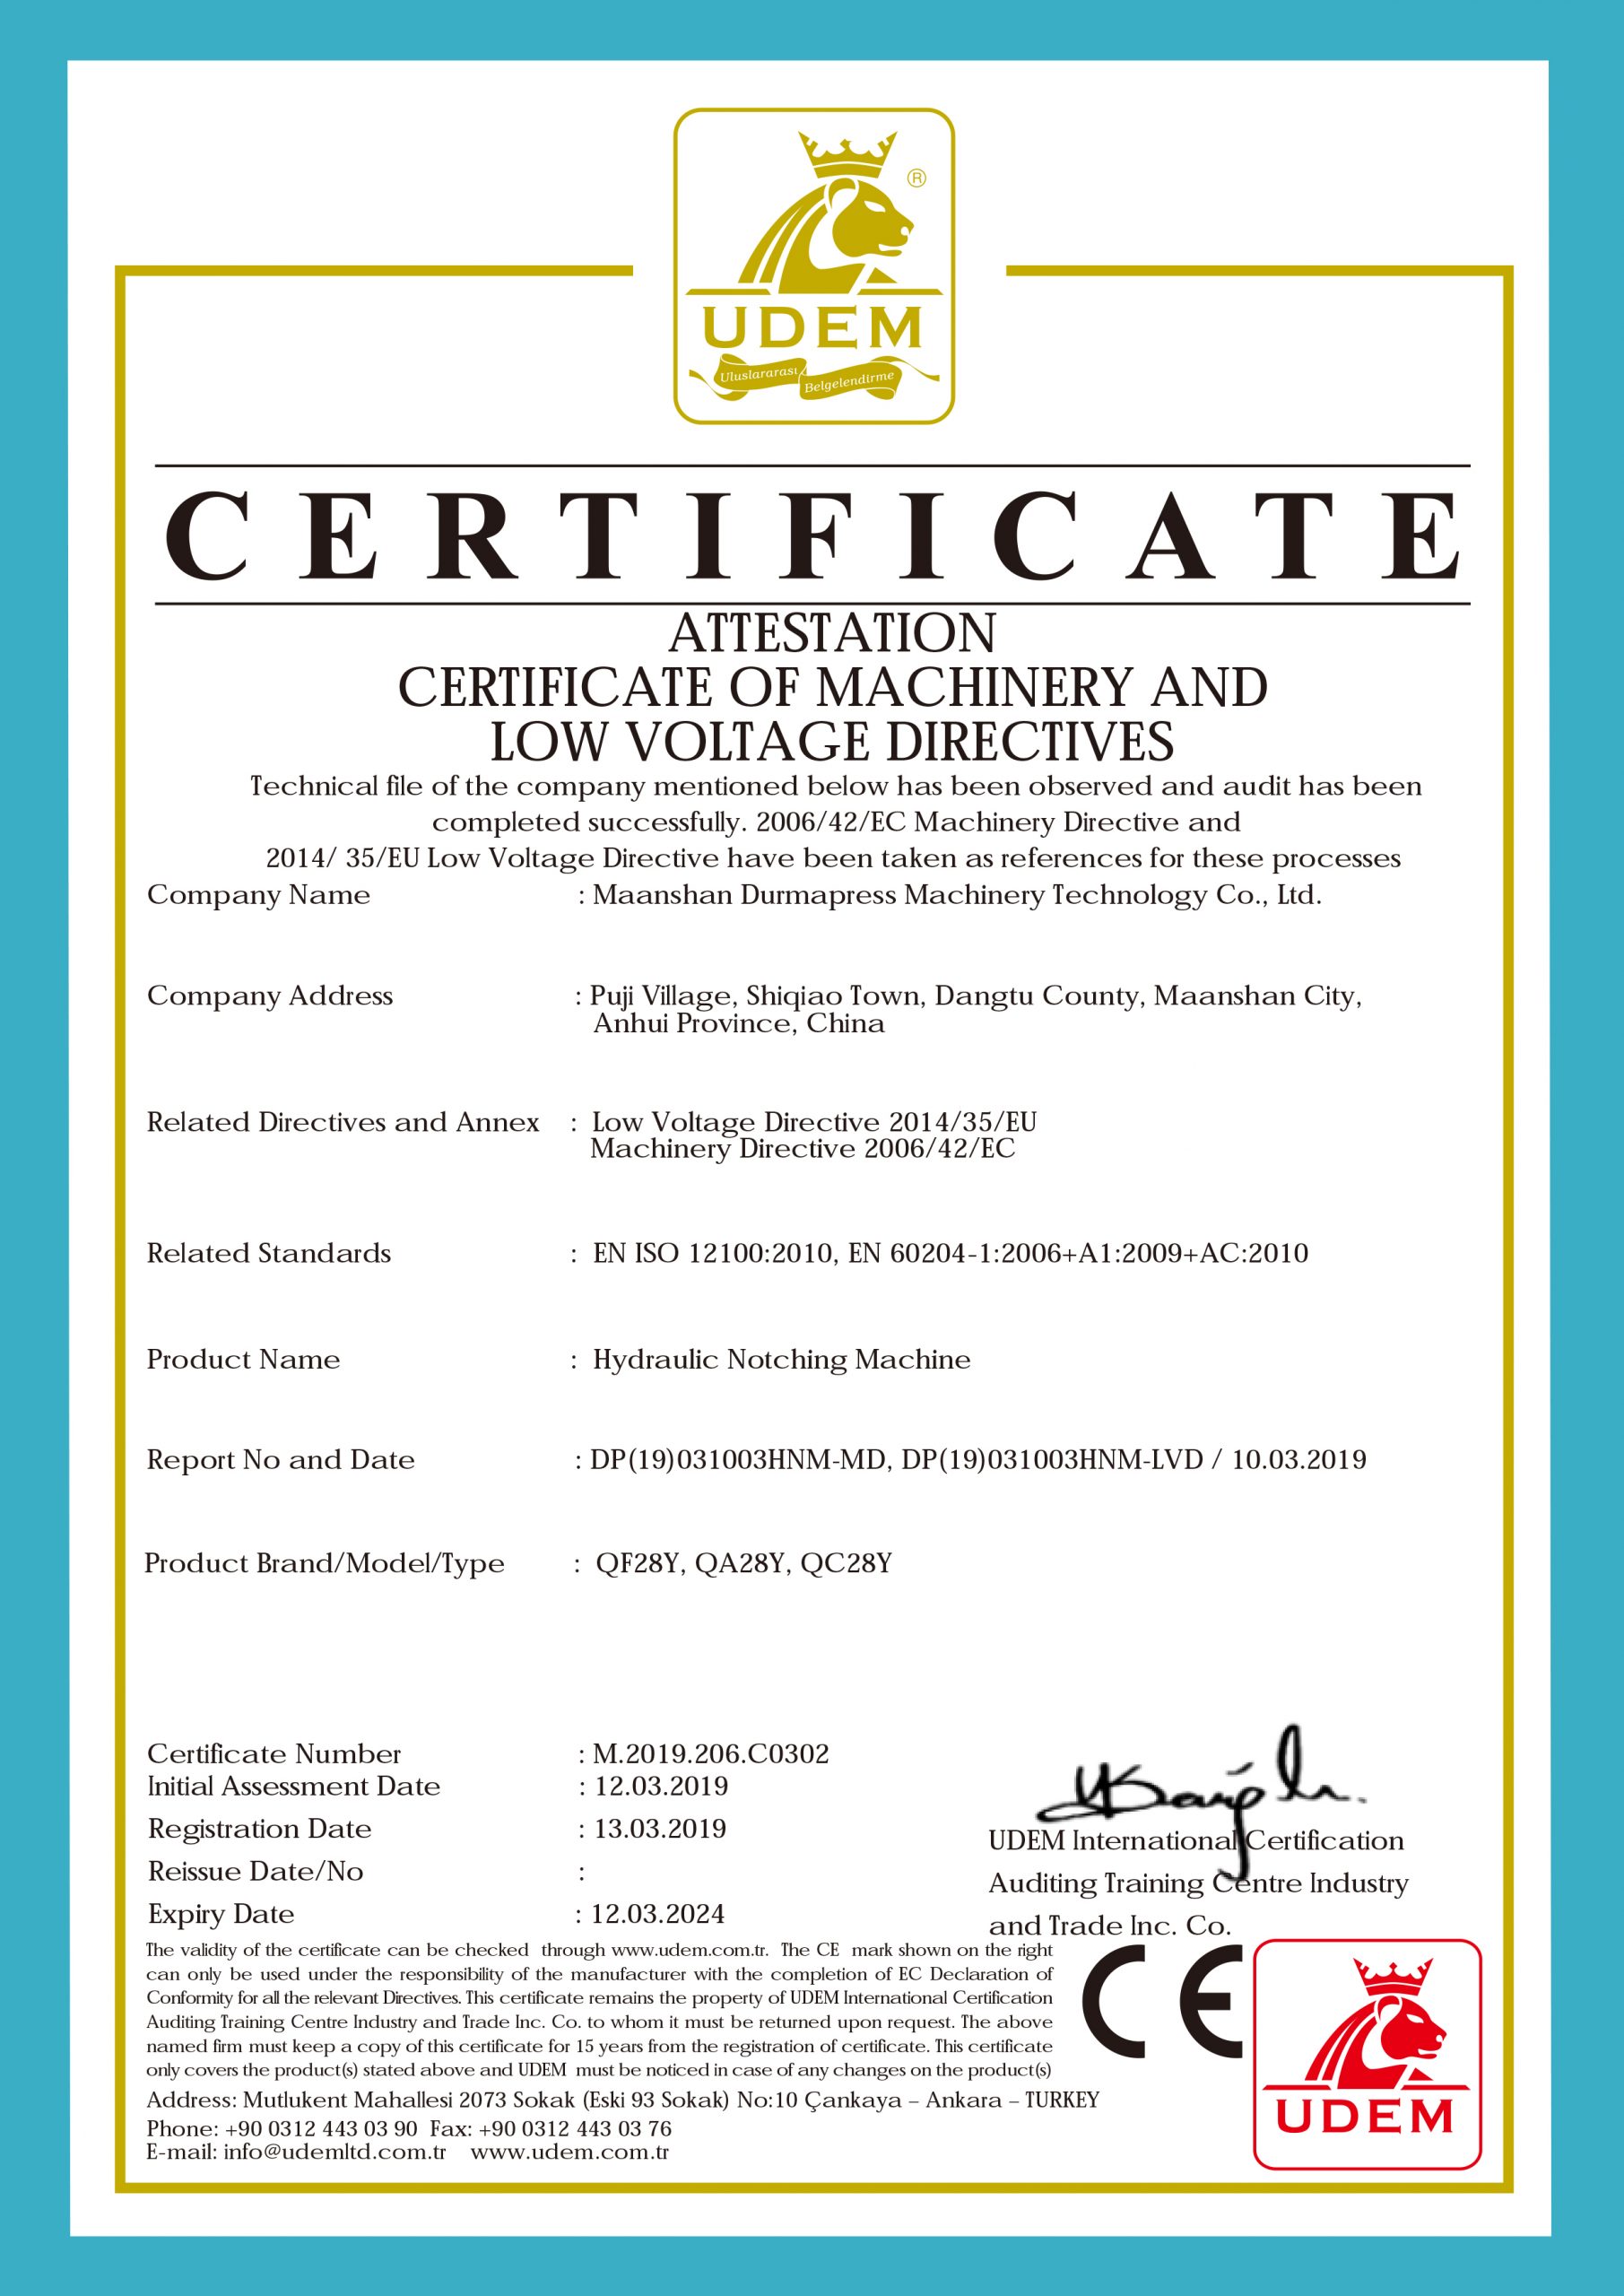 Durmapress Notching Machine CE Certificate